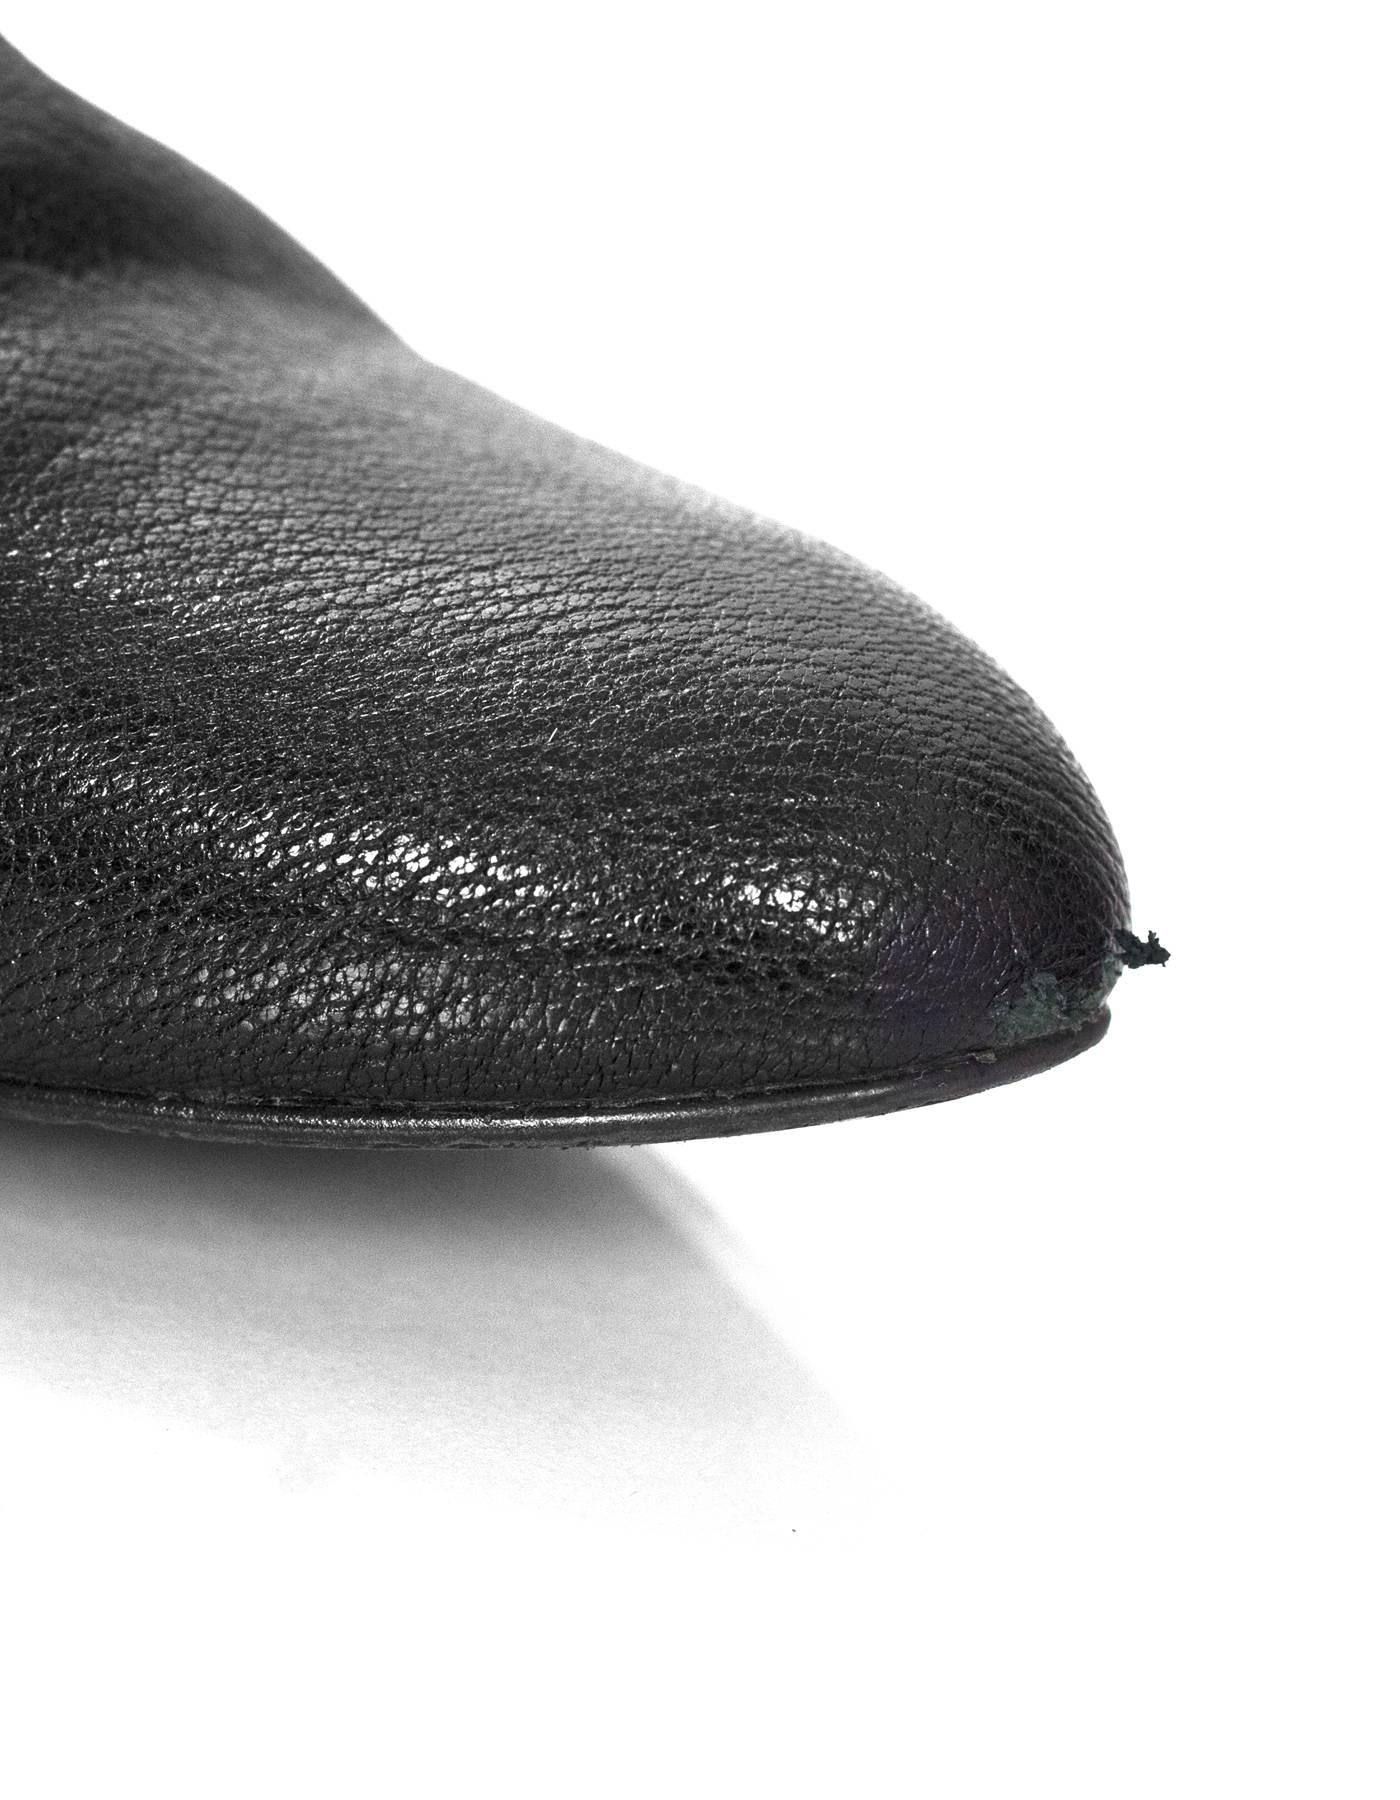 Stuart Weitzman Black Leather Ankle Boots Sz 6 1